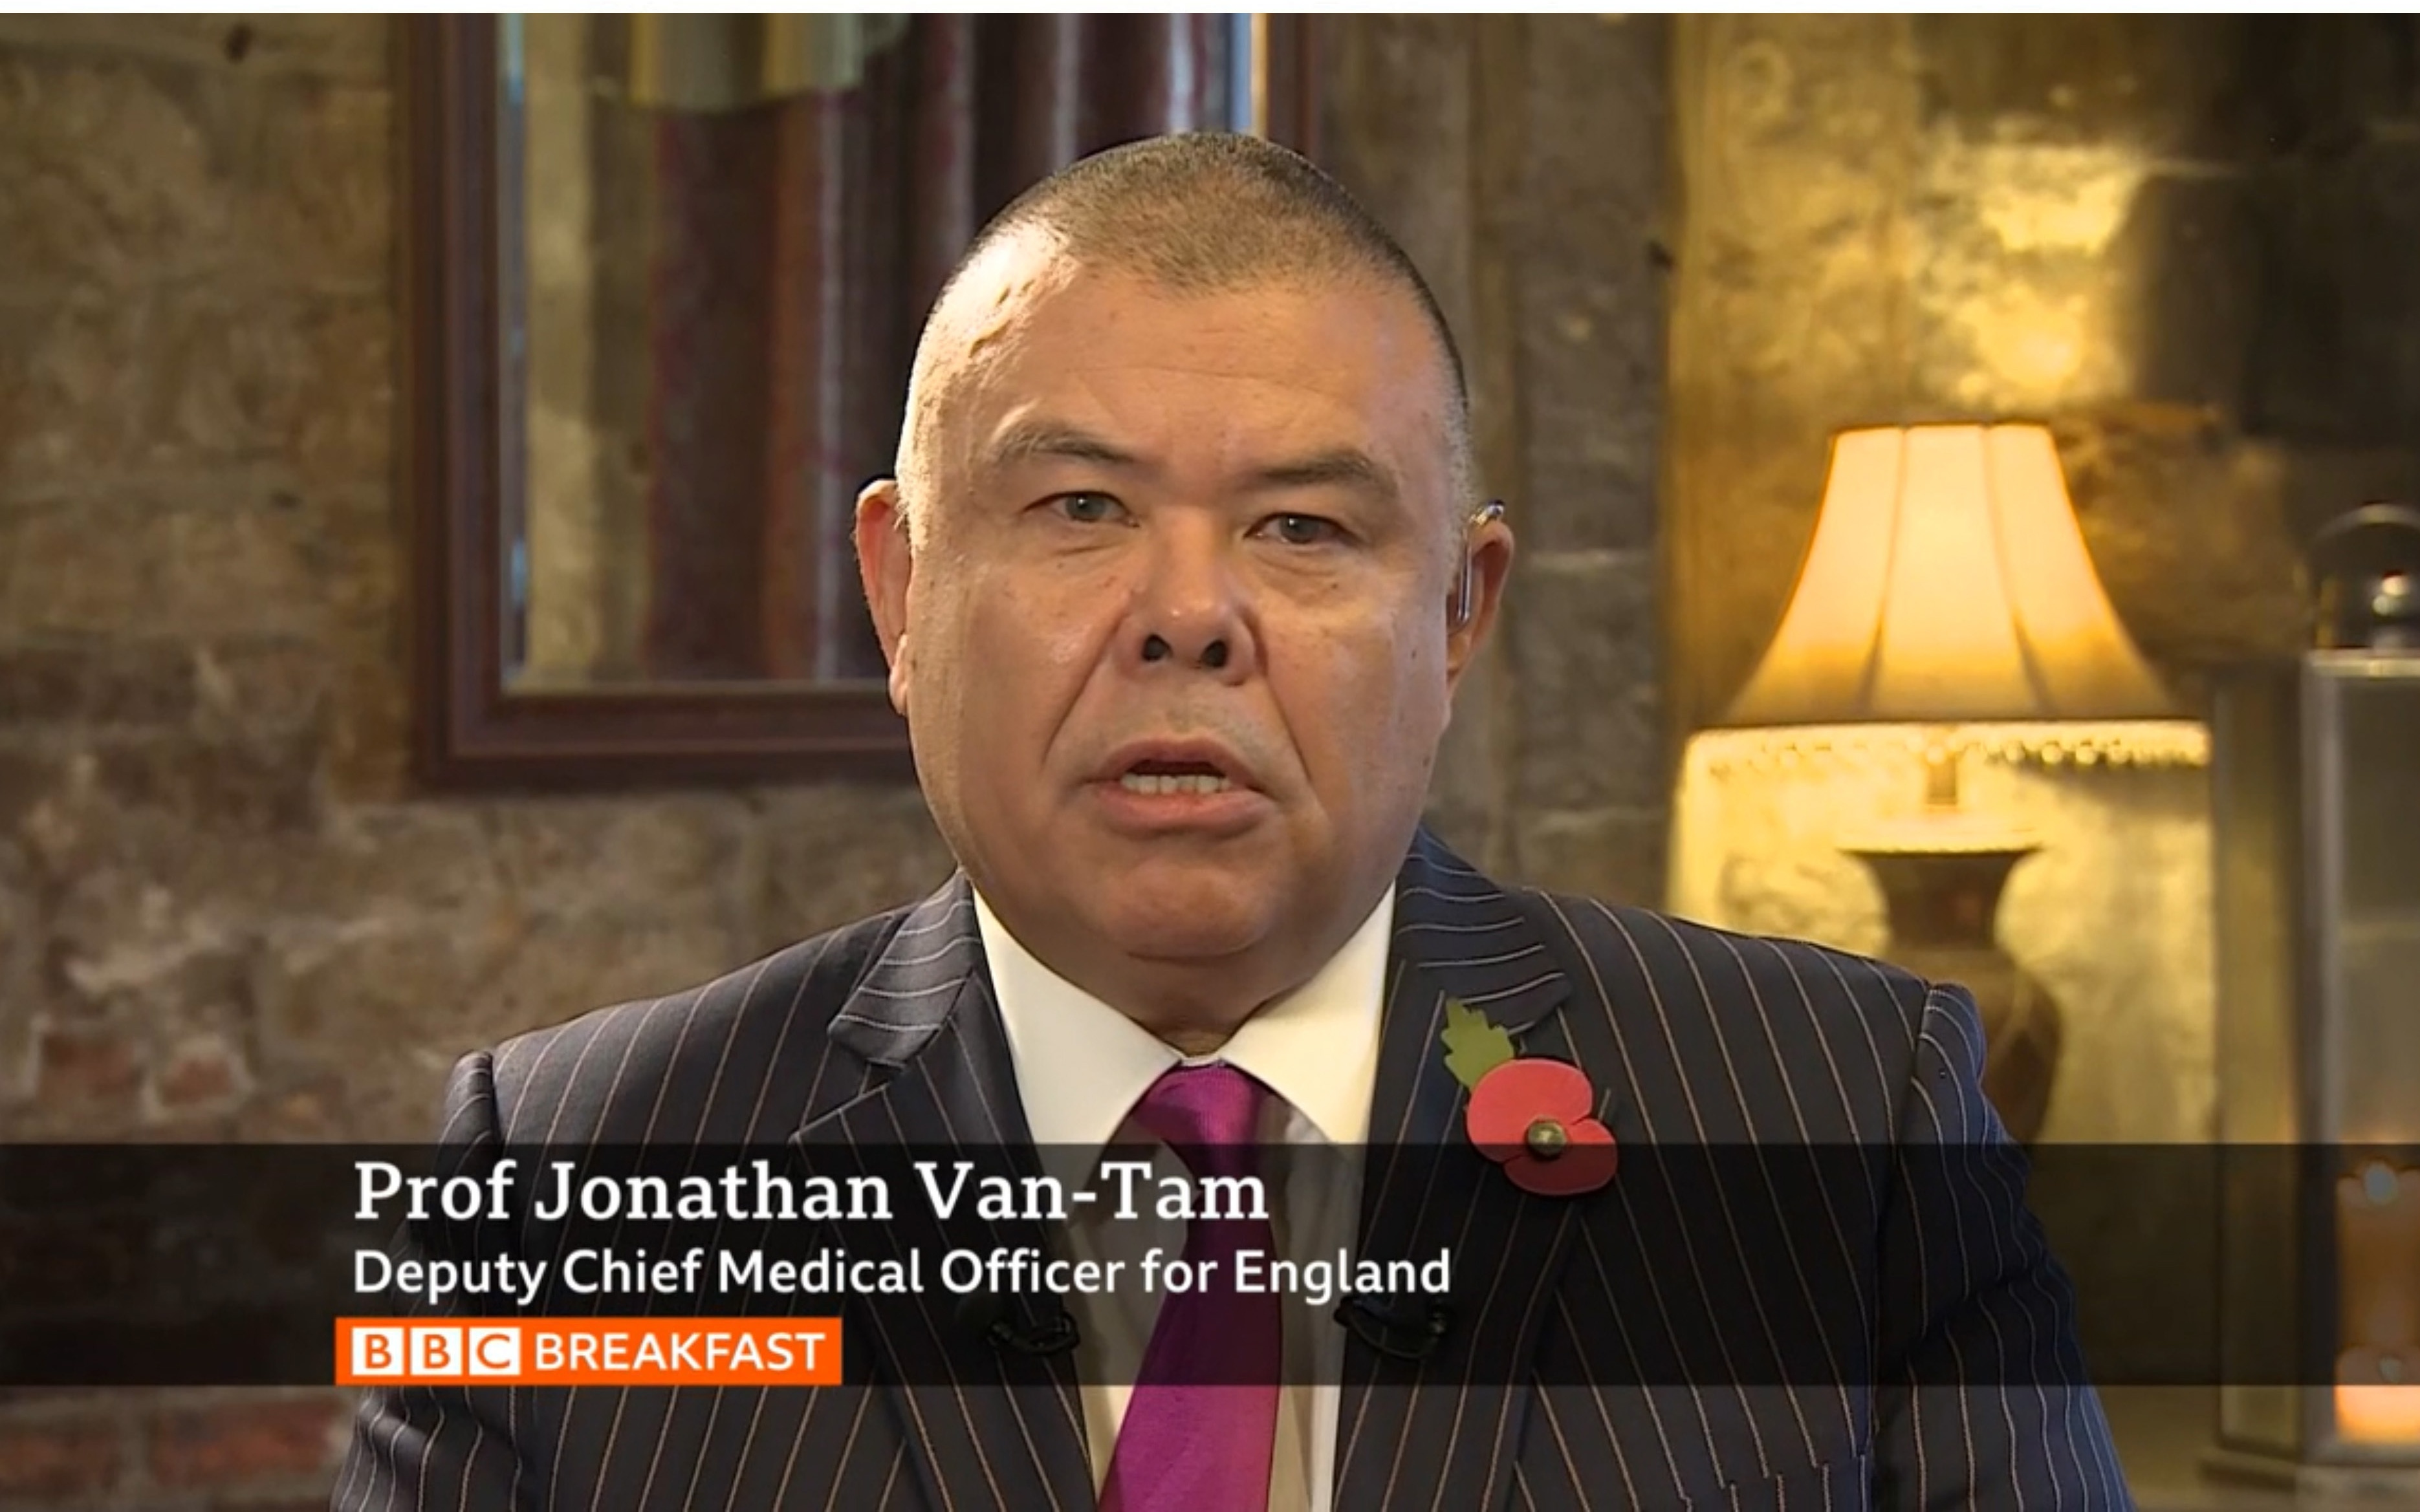 Professor Jonathan Van-Tam